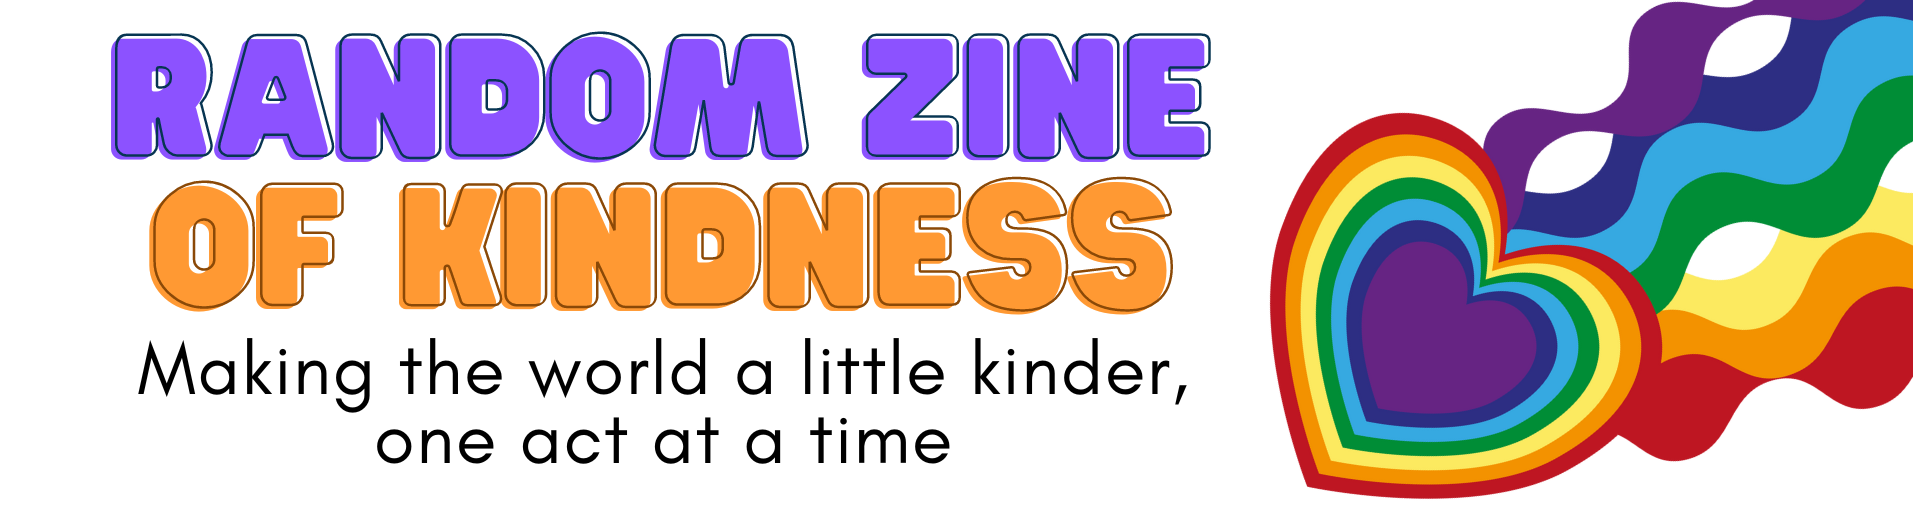 Random Zine of Kindness